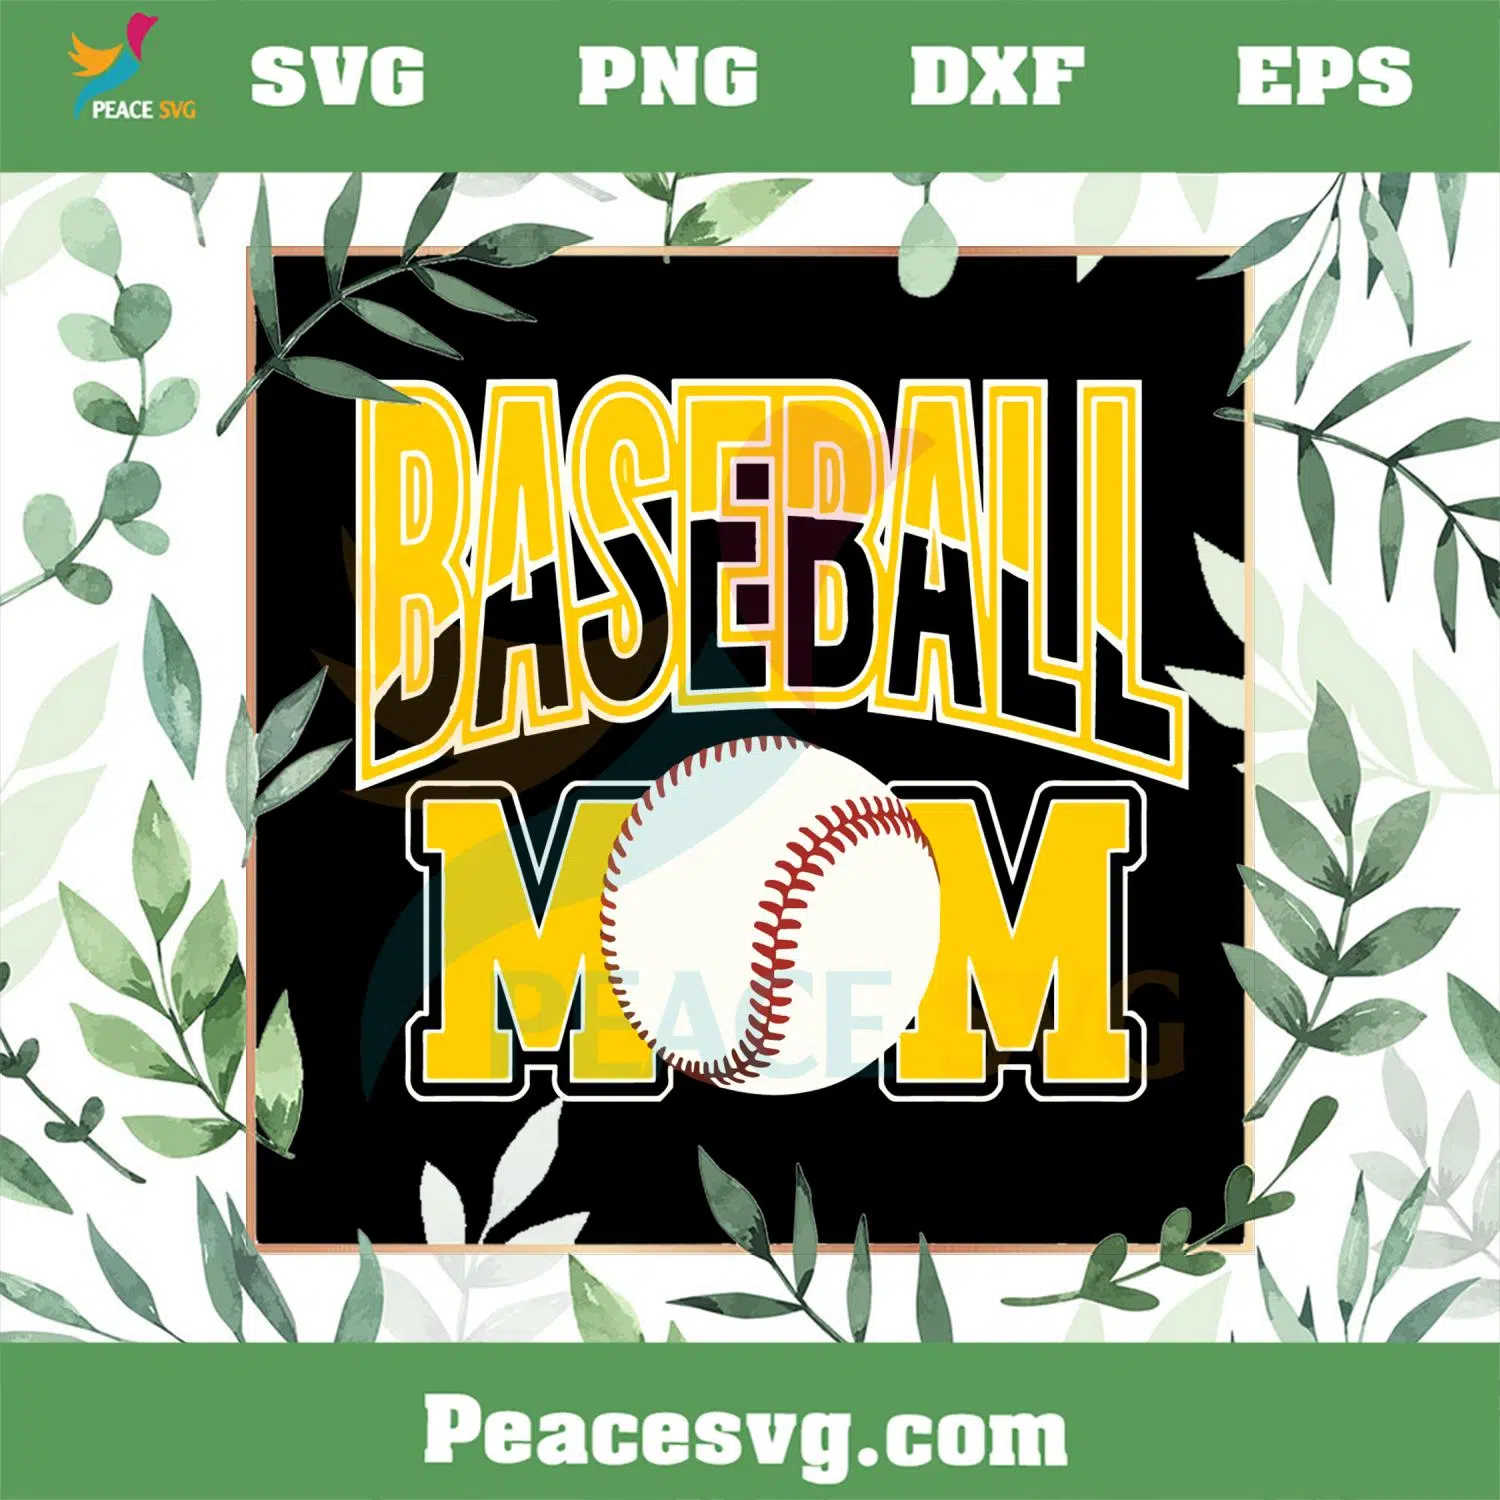 Baseball Mom Sports Mom SVG For Cricut Sublimation Files